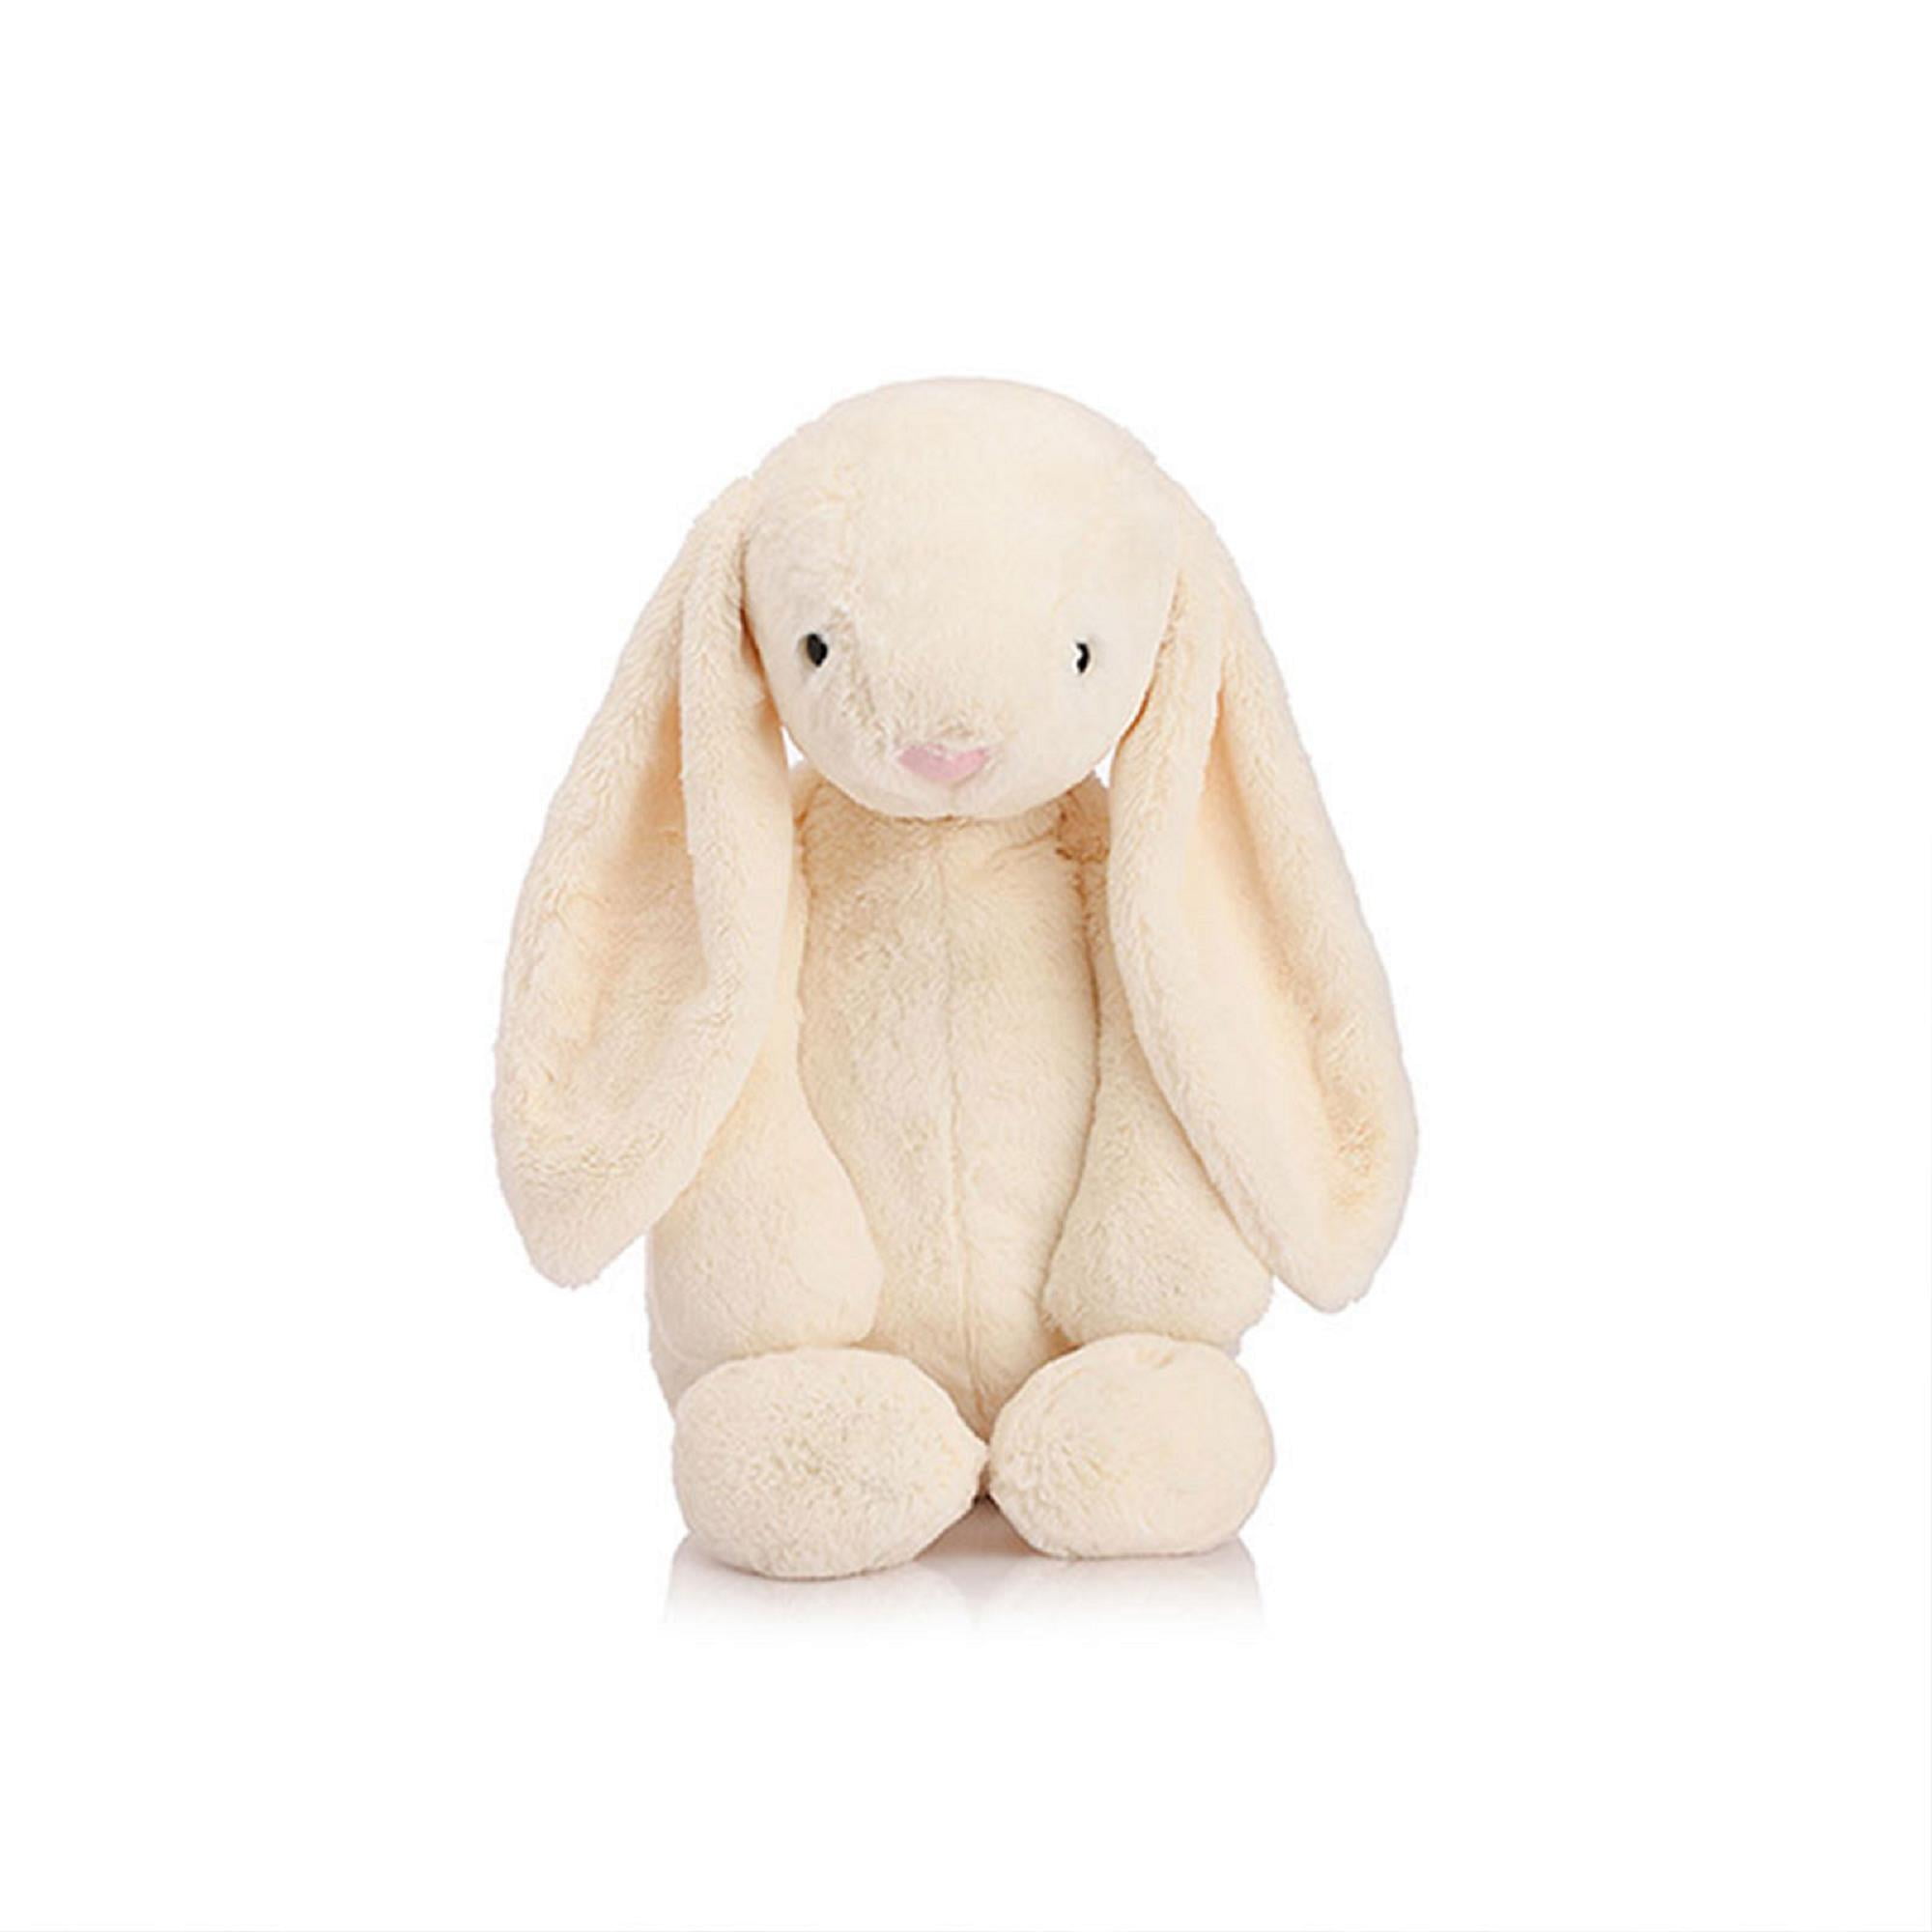 47'' Giant Plush Bunny Doll Big Soft Stuffed Long Ear Rabbit Toy 4 Colors 2 Size 